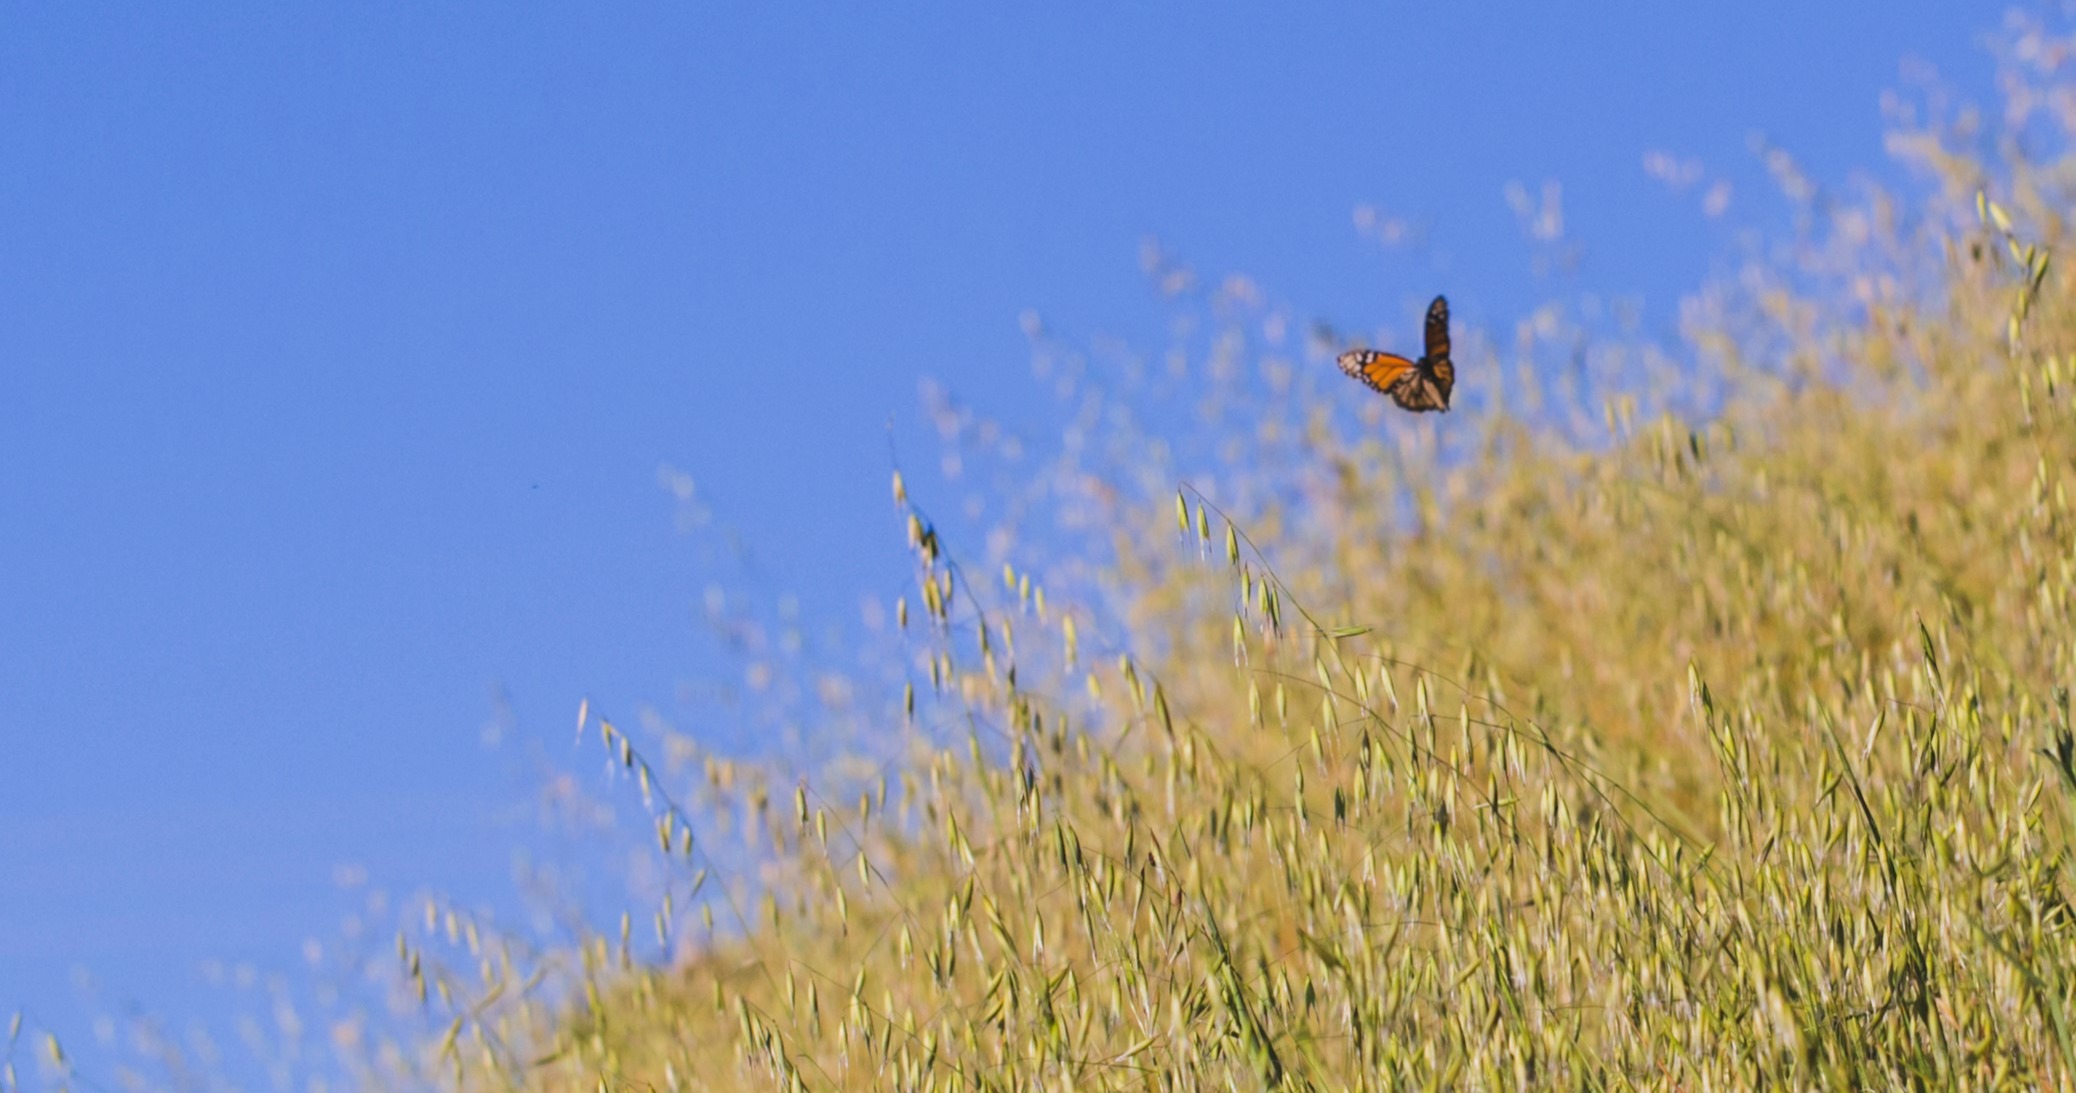 Monarch butterfly flying over golden grass under blue sky